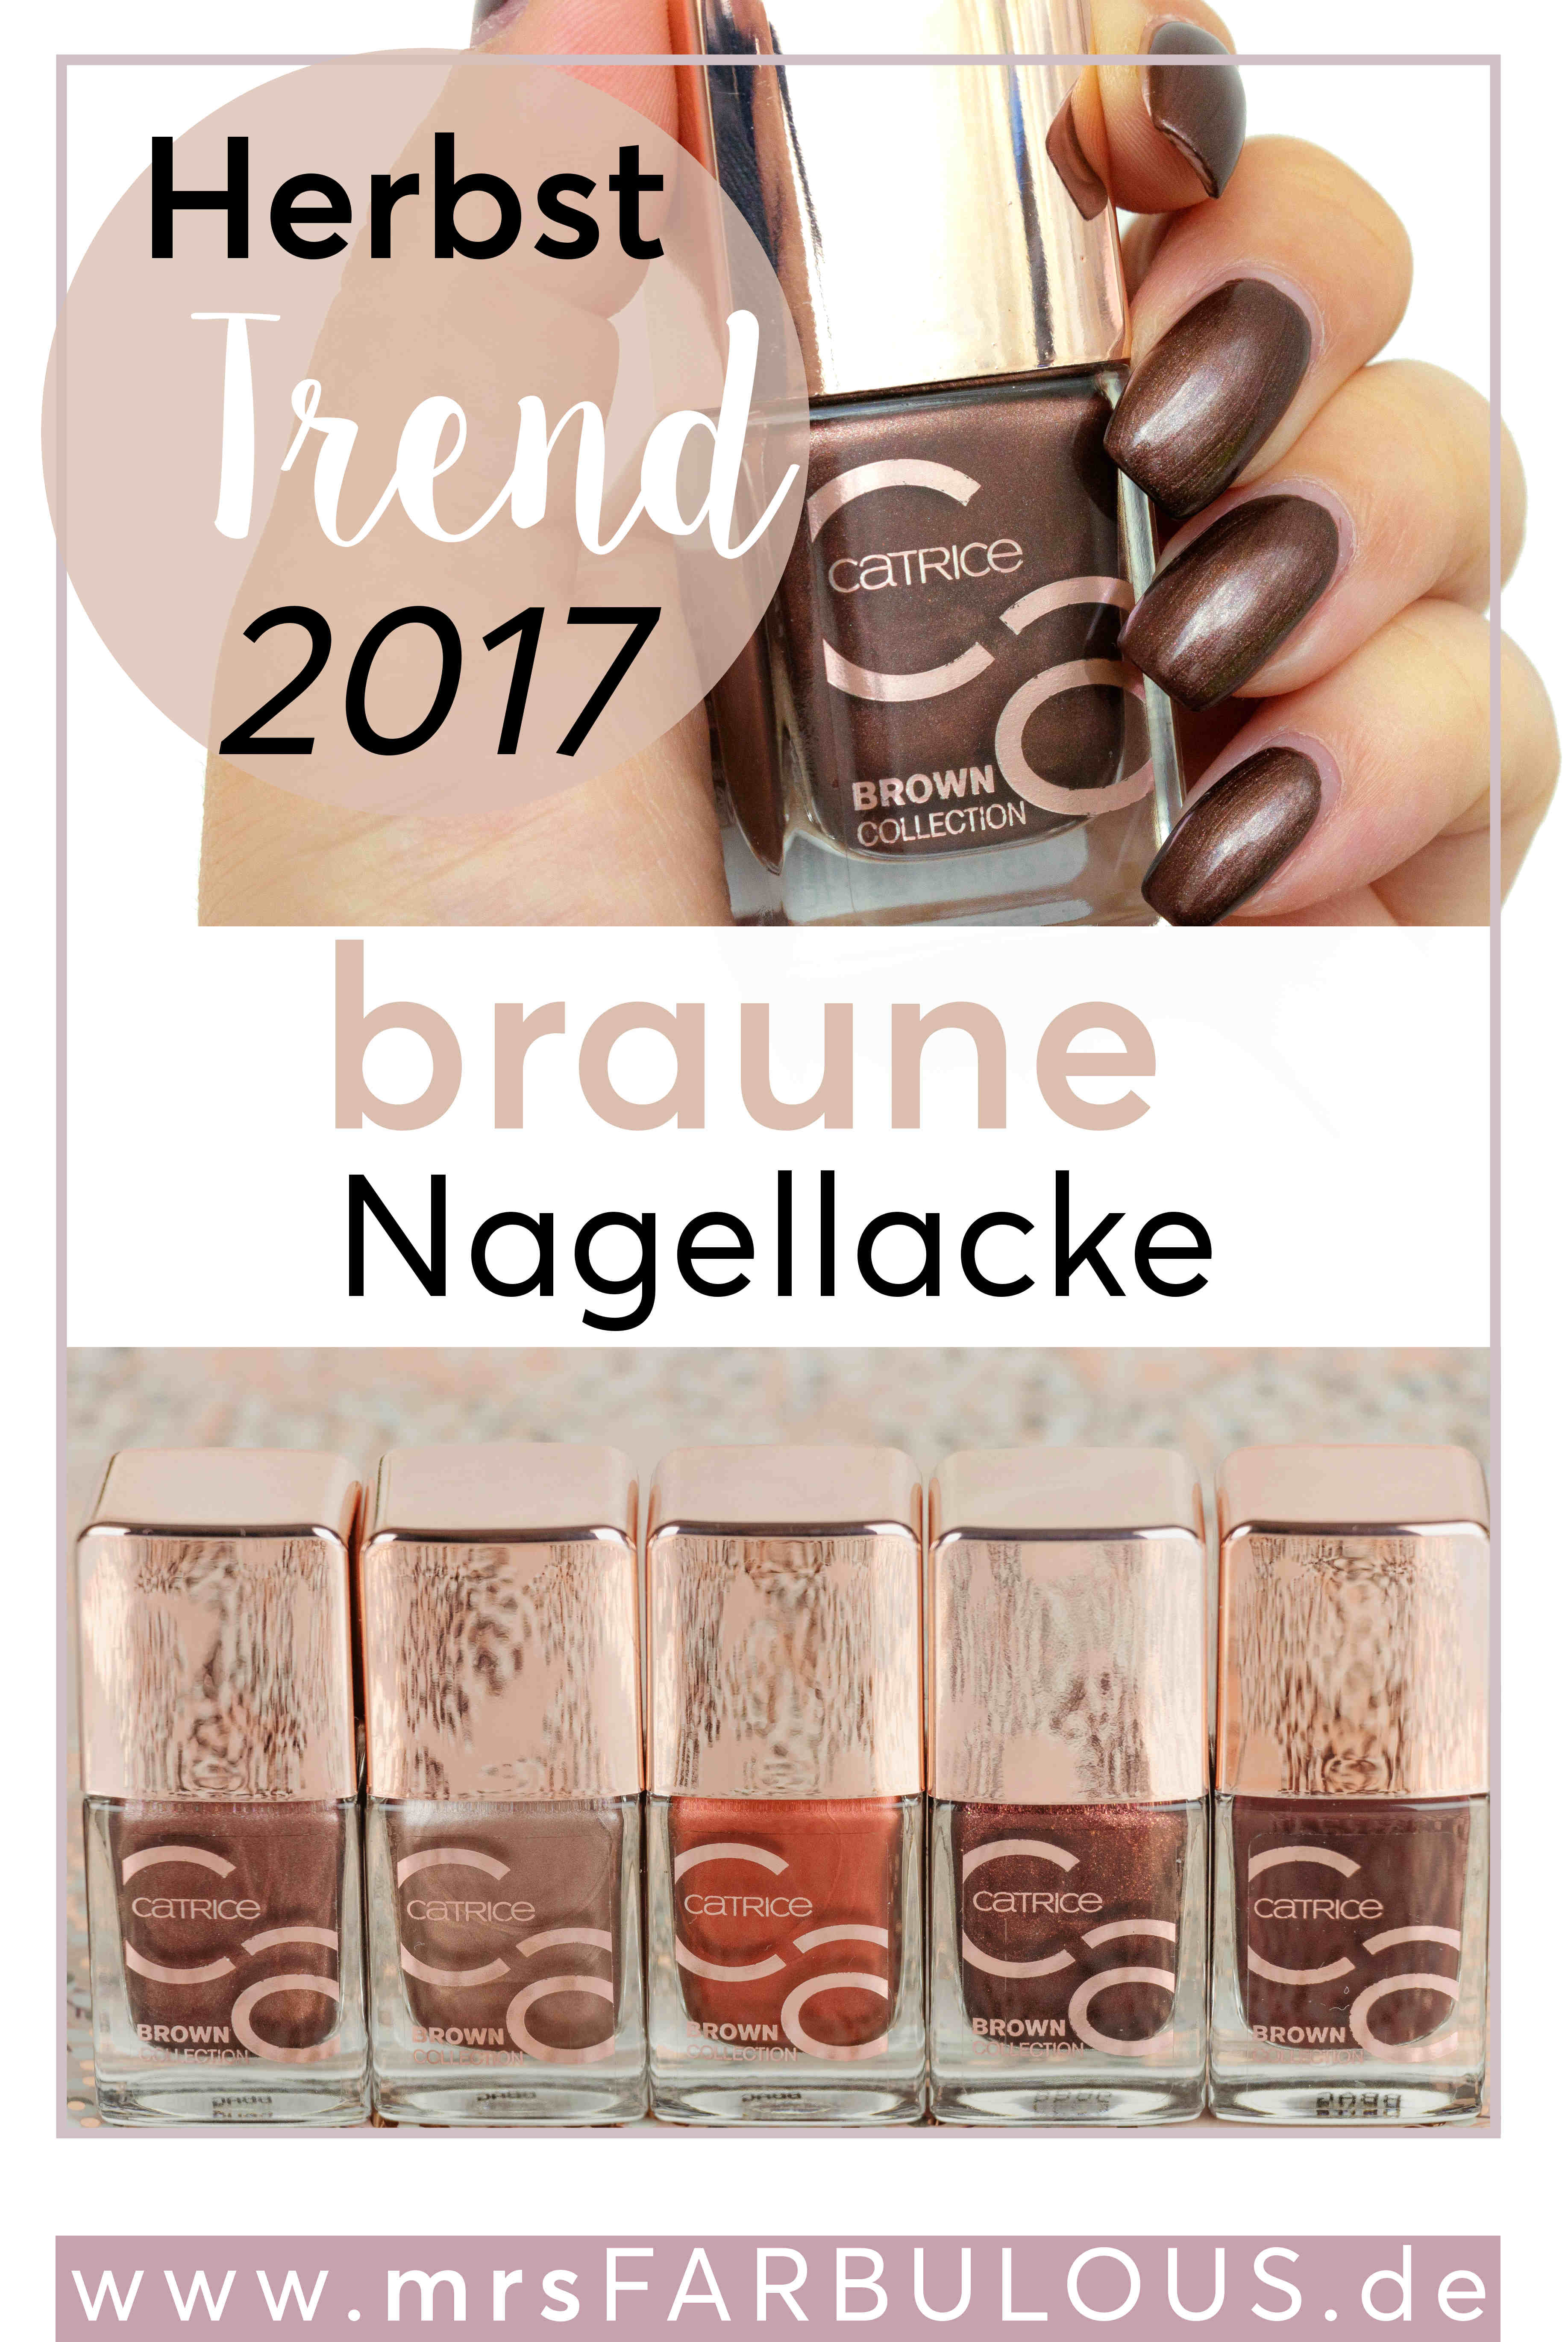 catrice Brown Collection Herbst Trend 2017 brauner Nagellack